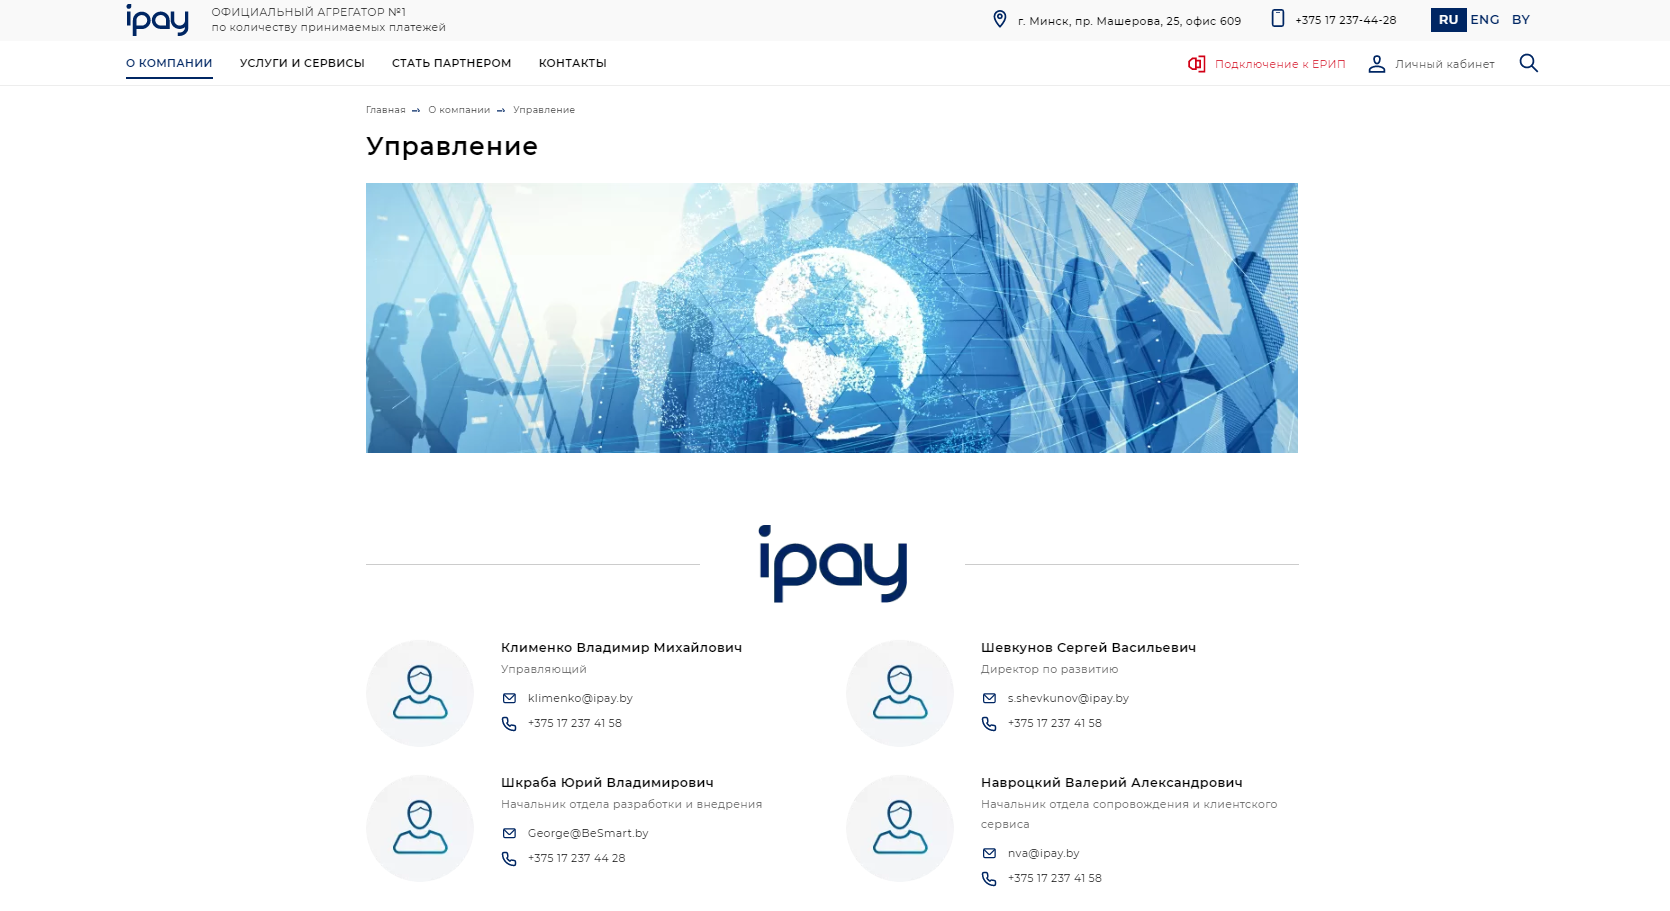 ipay - агрегатор онлайн-платежей. русскоязычная версия